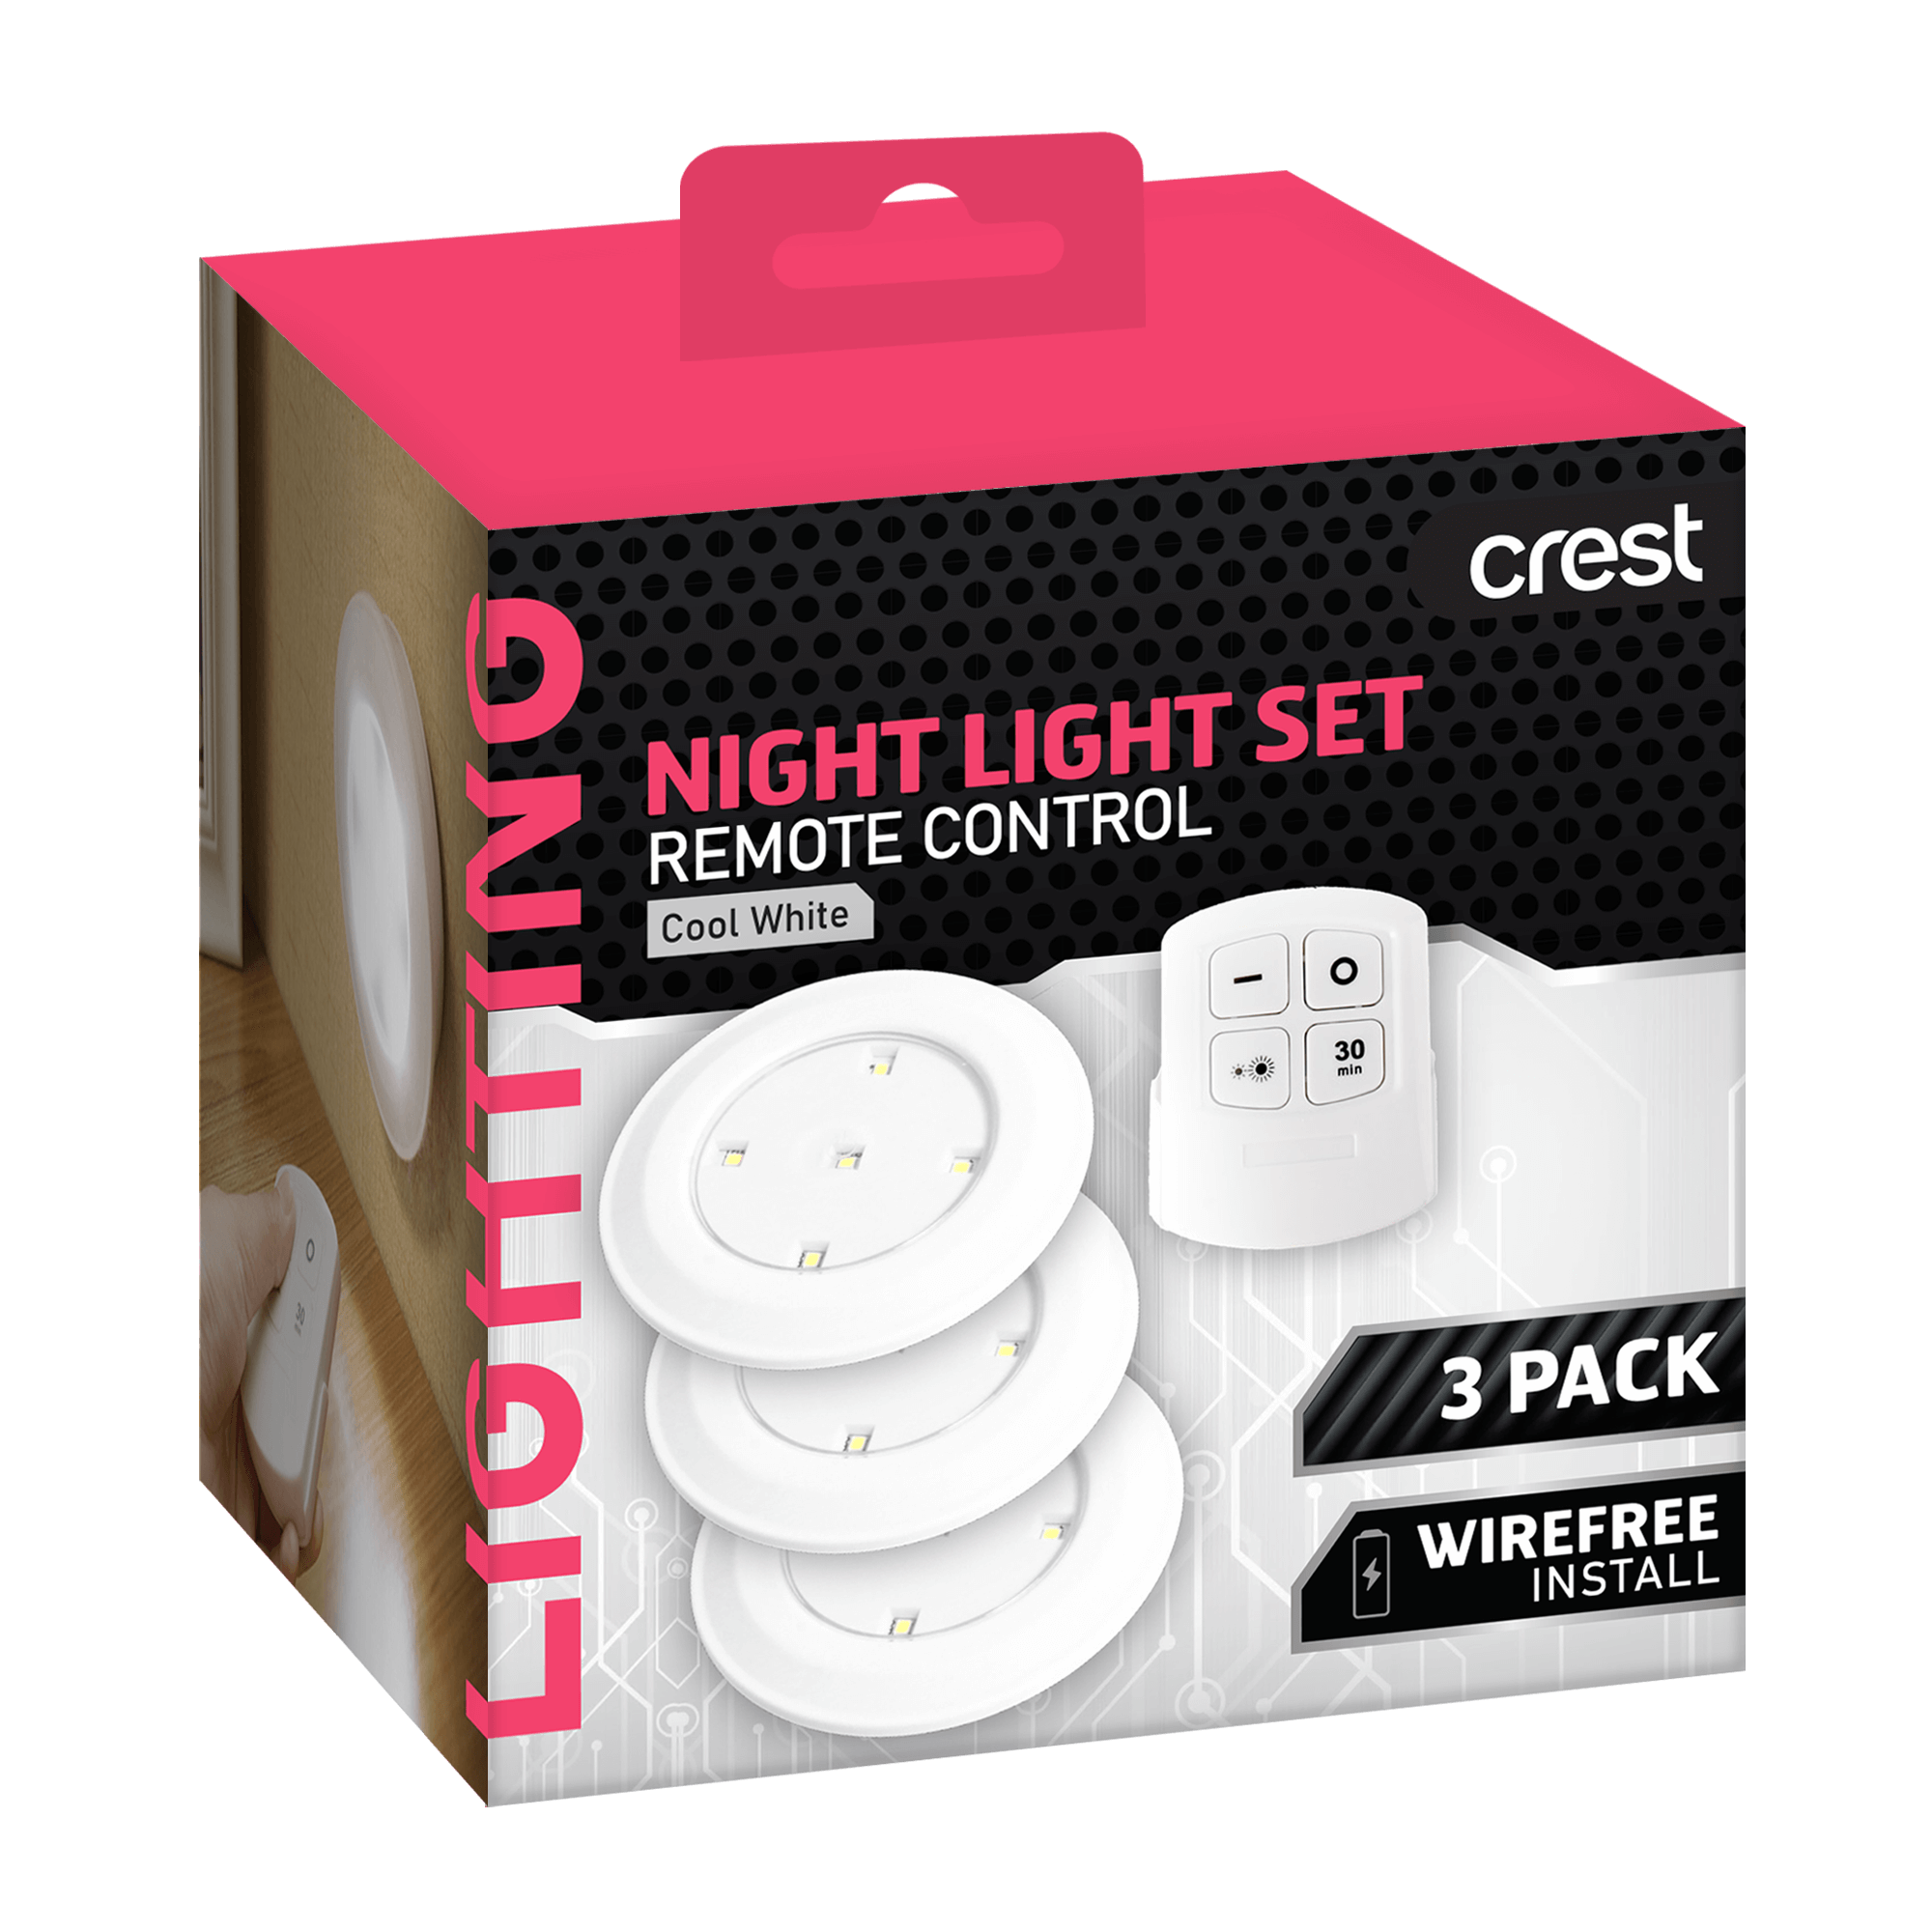 Remote Control Push Night Light Set - 3 Pack